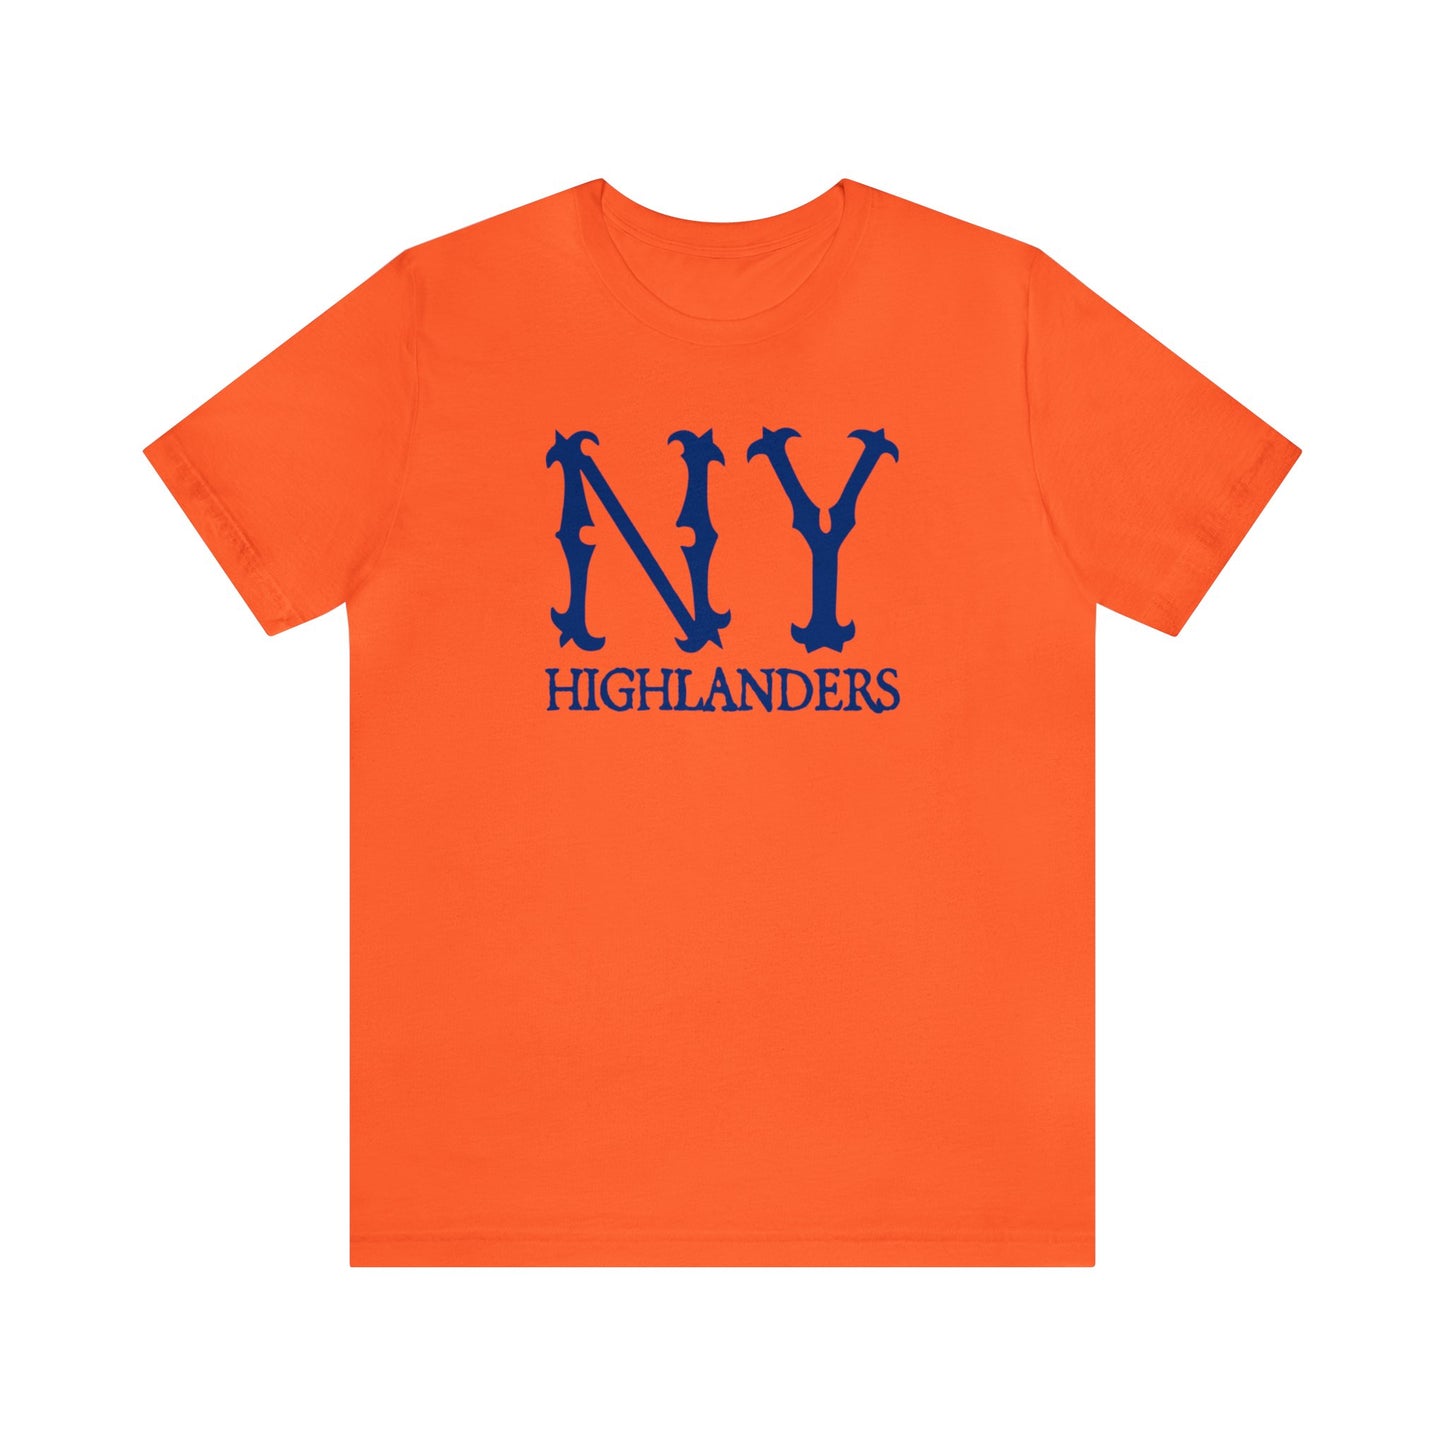 New York Highlanders 2 - Unisex T-Shirt